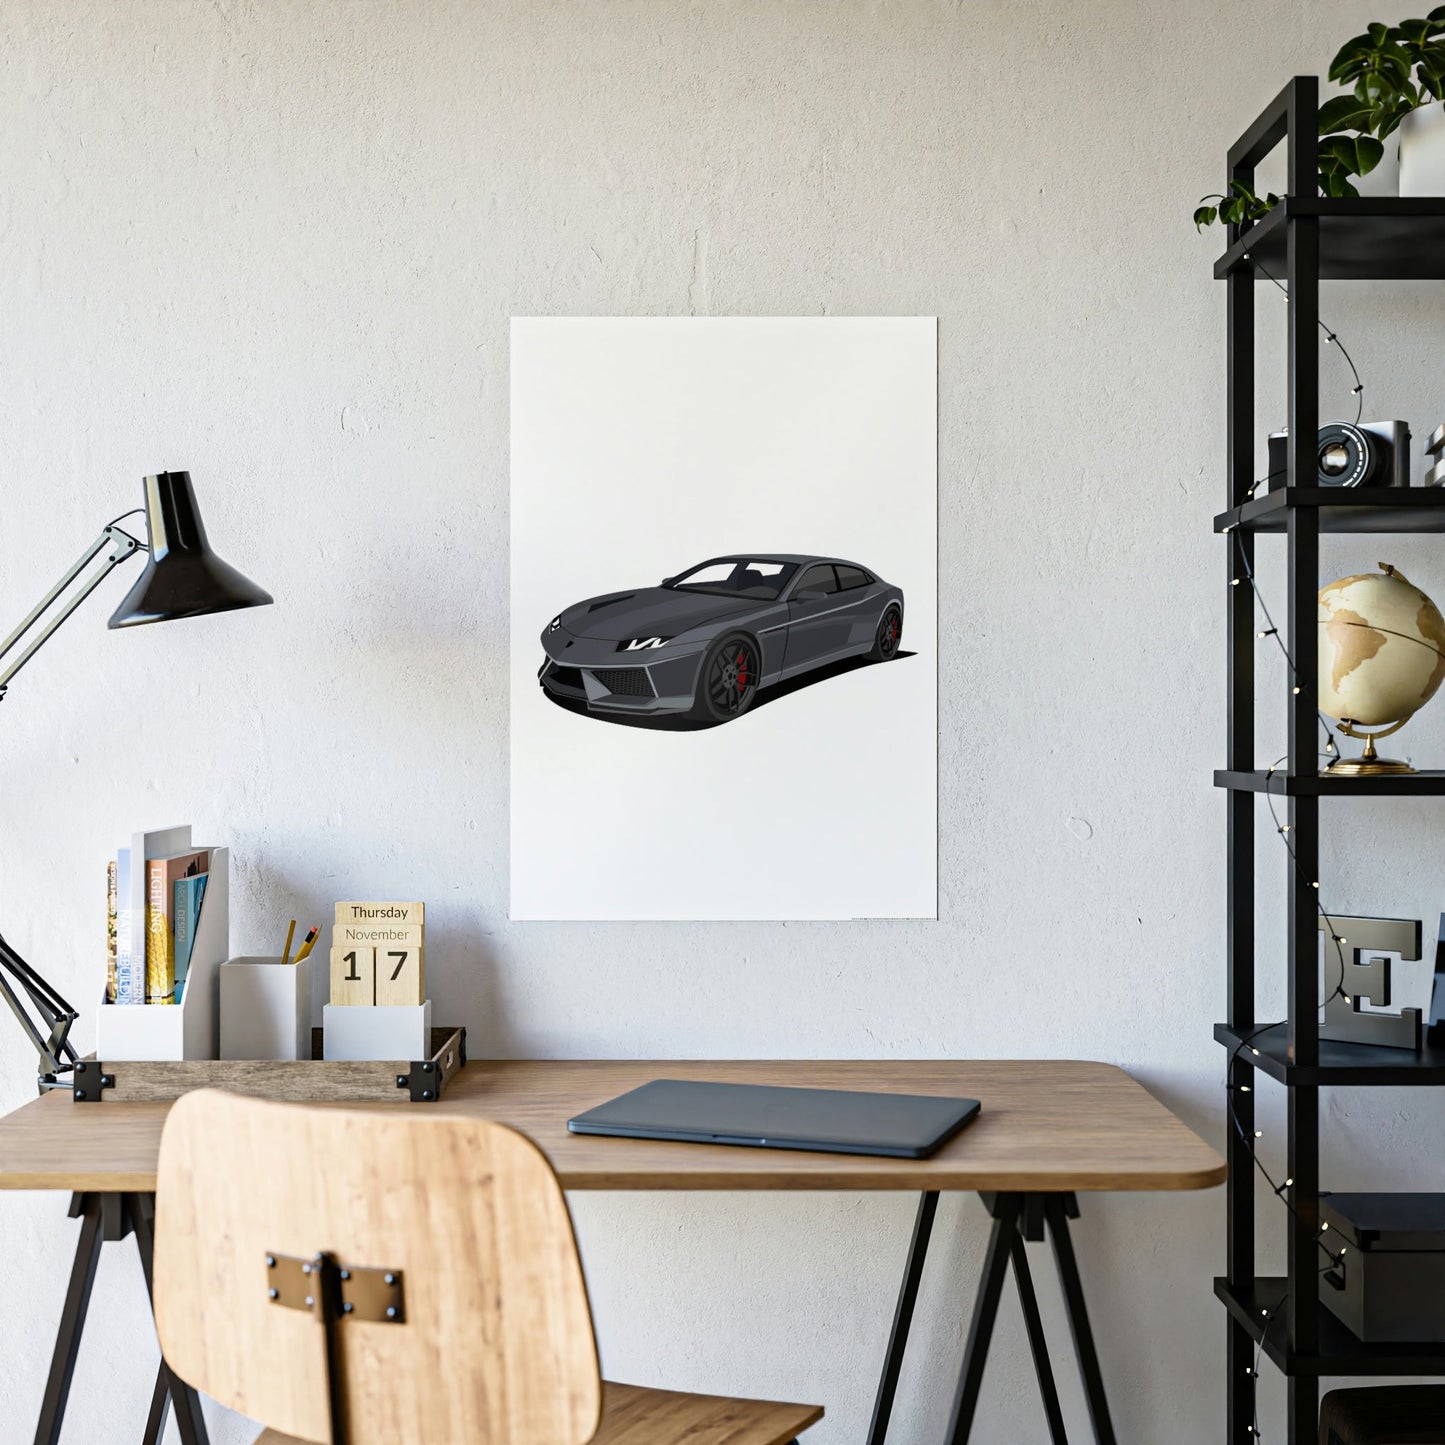 Mysterious Power: Black Lamborghini Framed Canvas & Poster Artwork